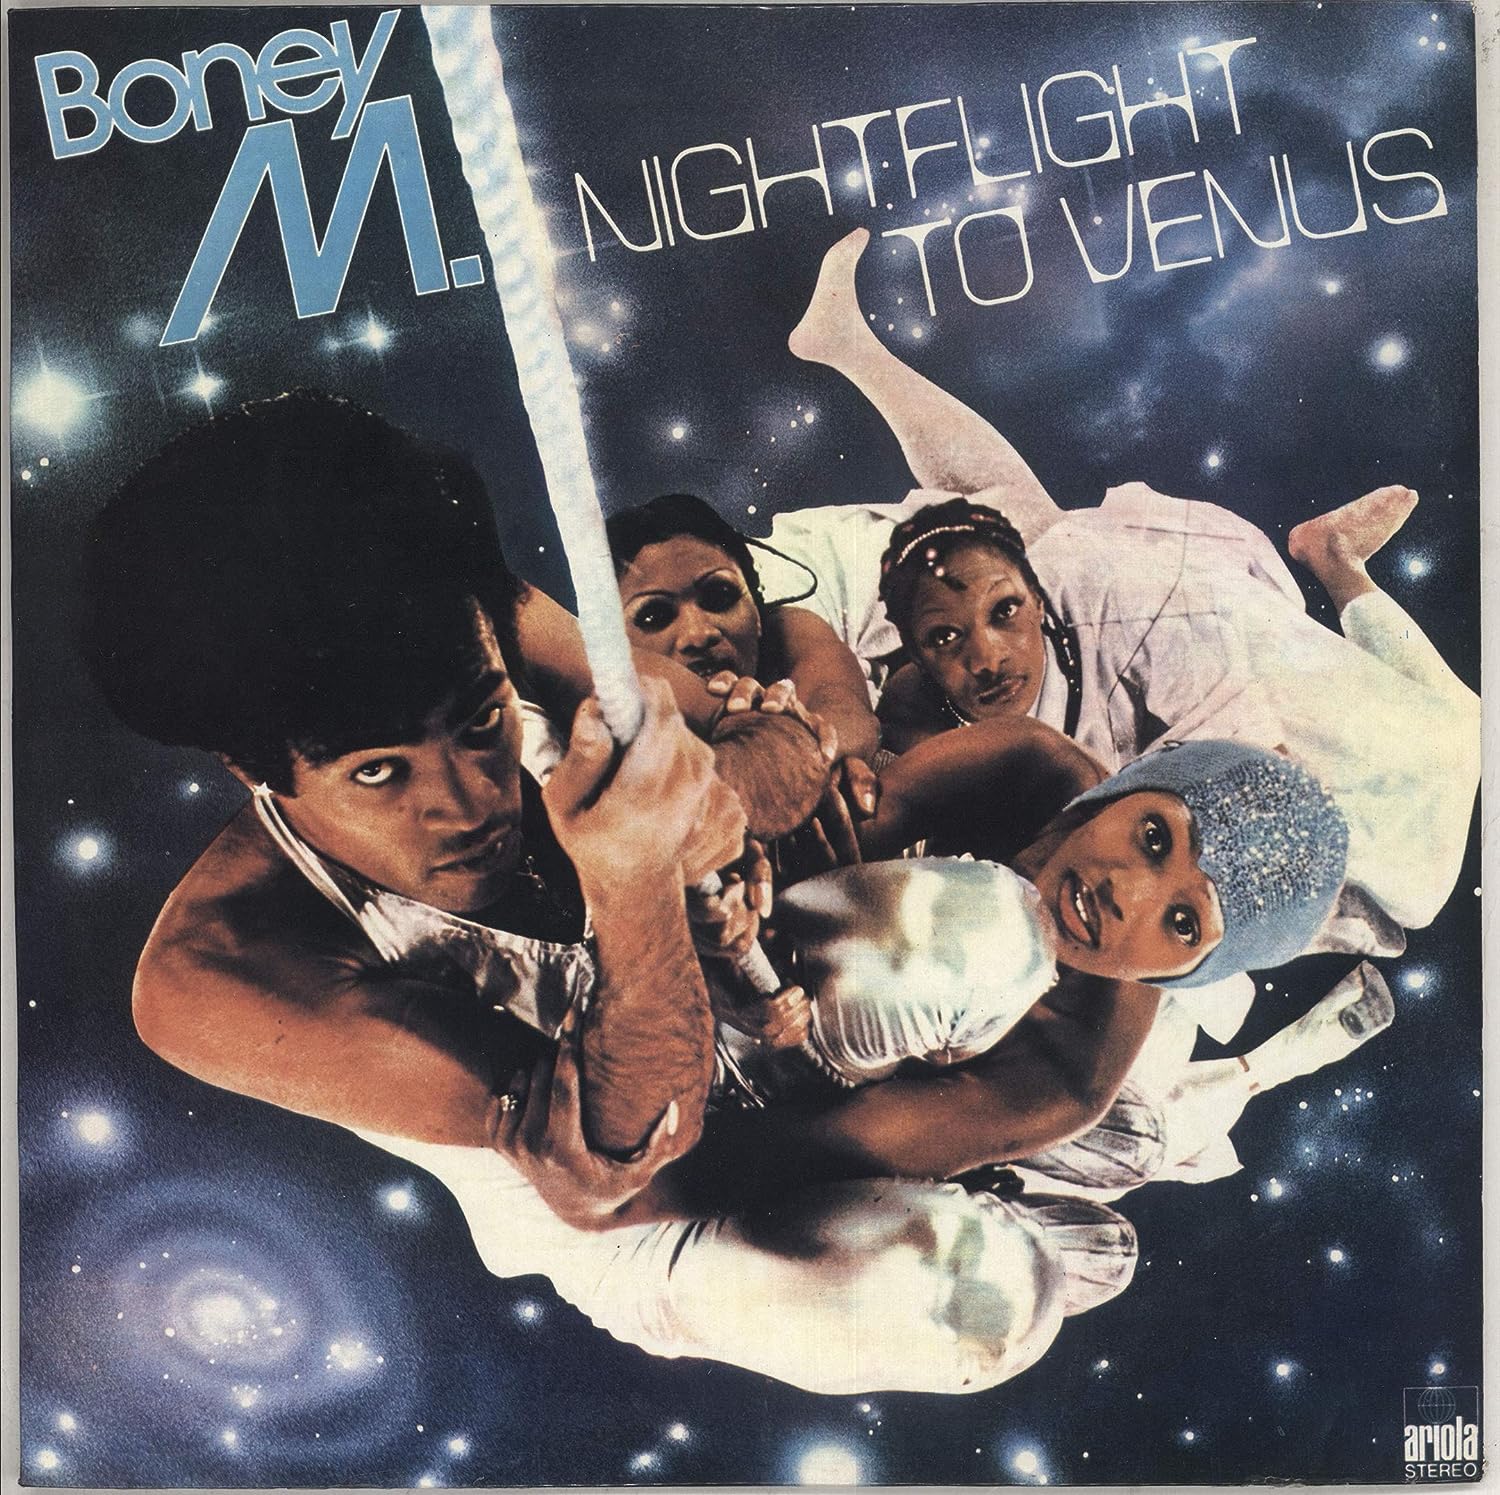 Boney m venus. Boney m Nightflight to Venus 1978. Бони м обложки. Обложки пластинок Boney m. Boney m cd1.